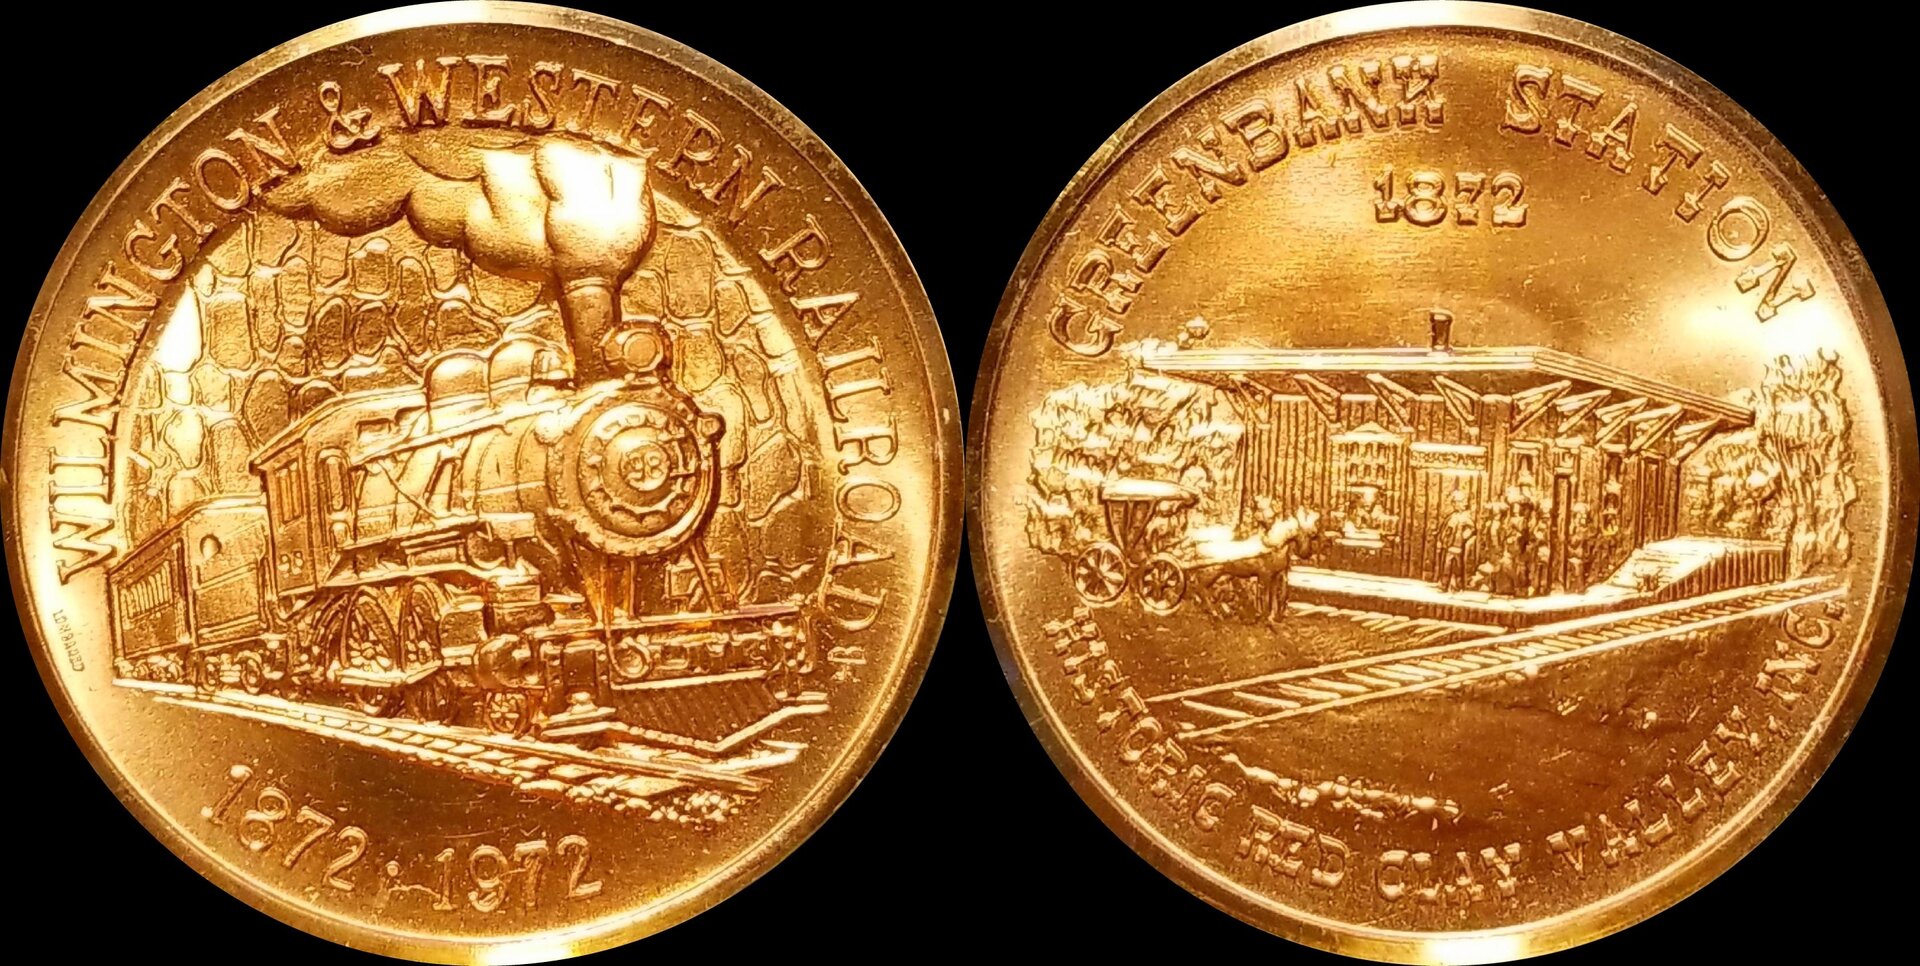 rain token medal 1872 1972 WILMINGTON RAILROAD 3.jpg